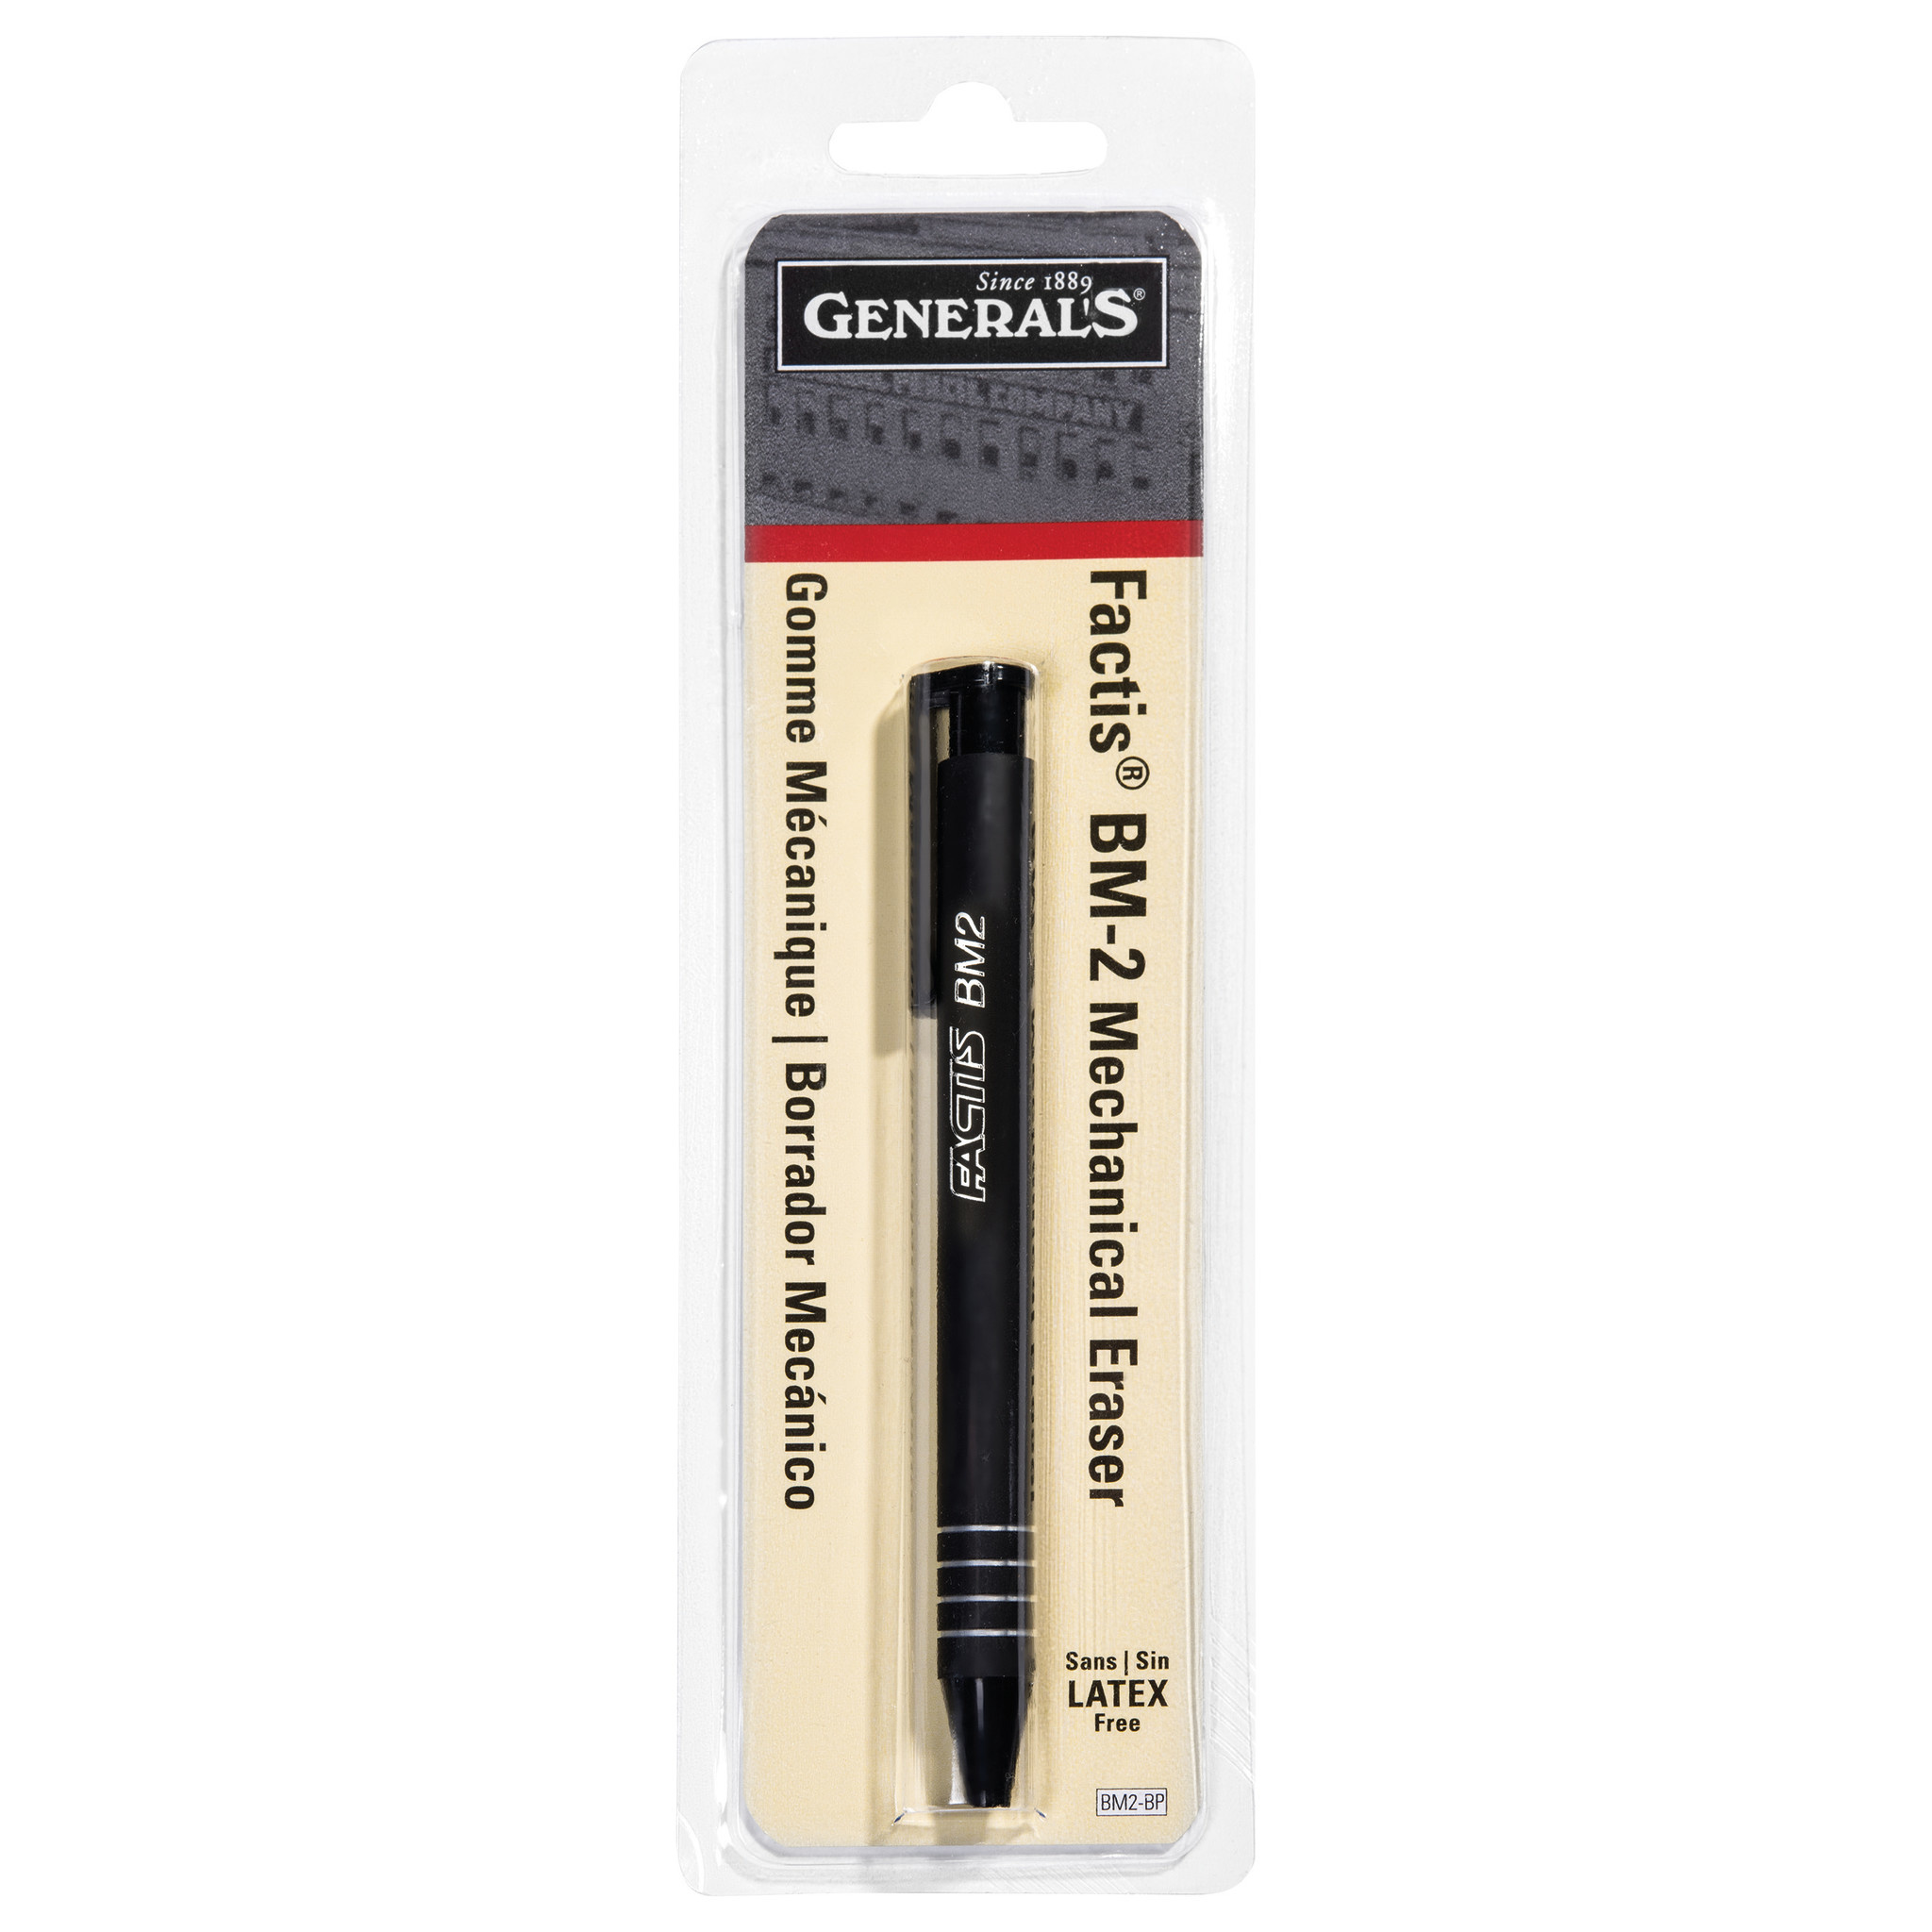 General Pencil Art Eraser Set